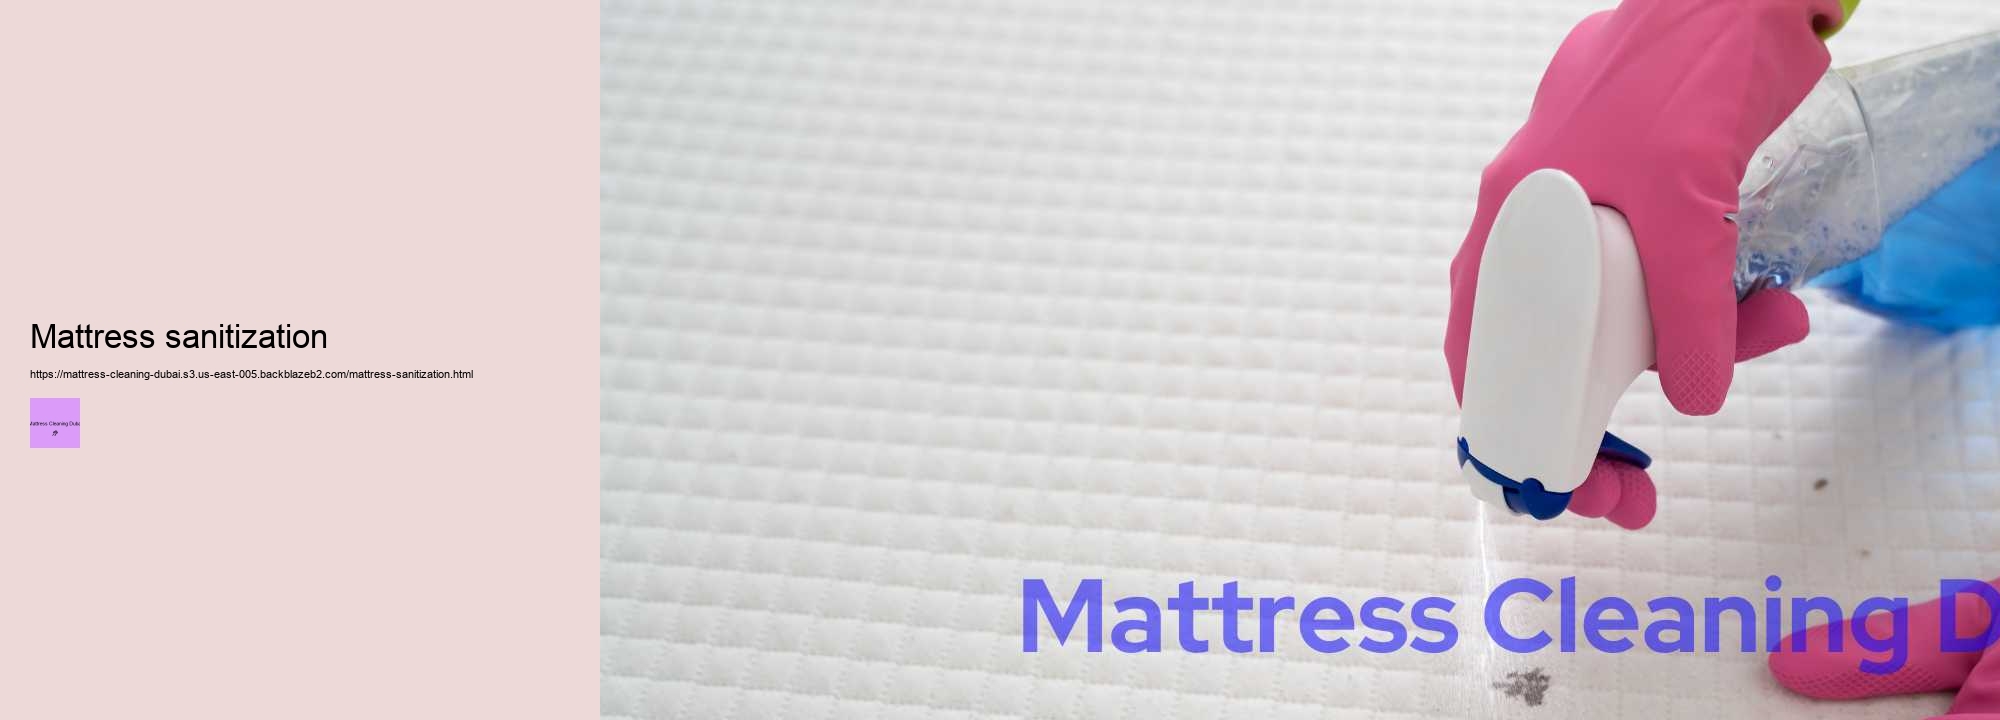 Mattress sanitization